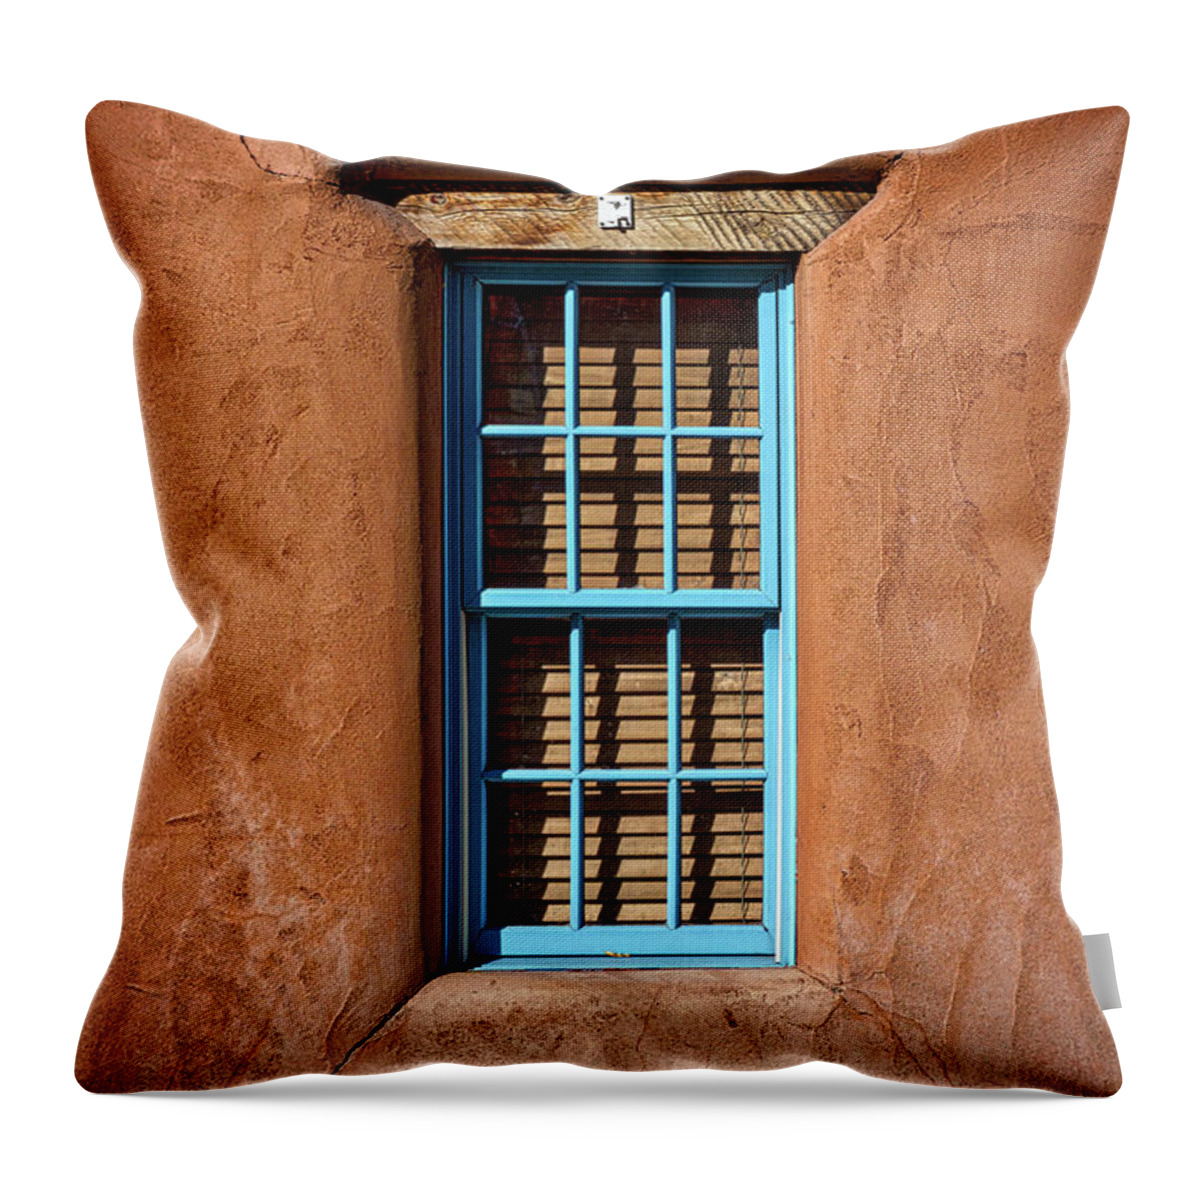 Santa Fe Throw Pillow featuring the photograph Turquoise Window - Santa Fe by Stuart Litoff